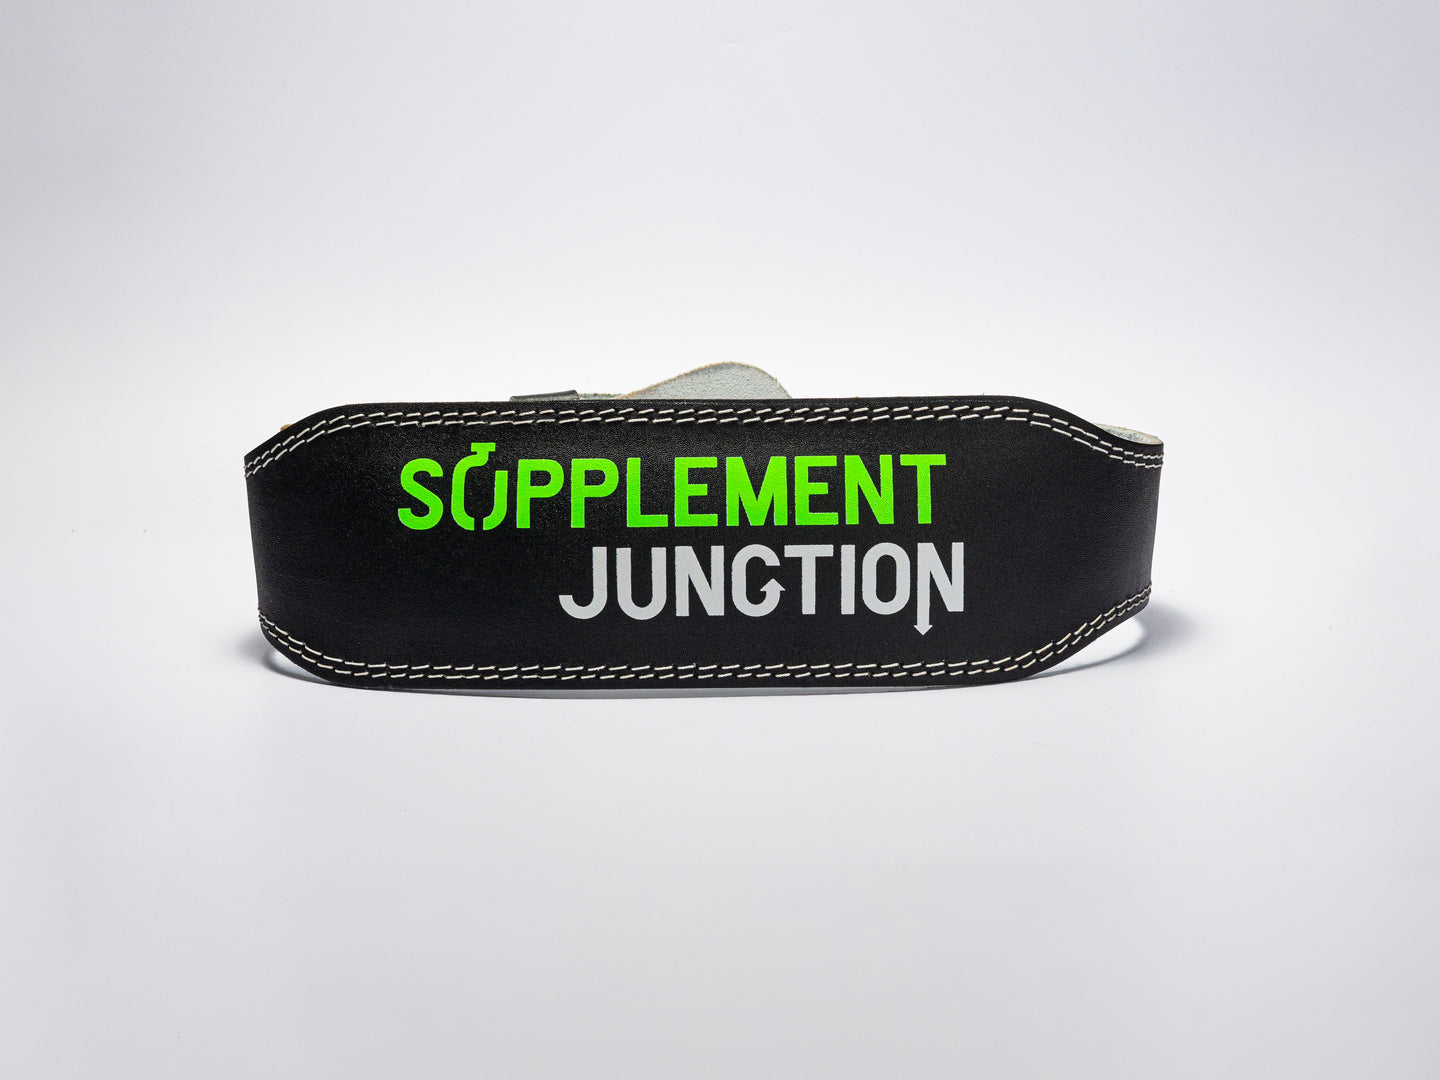 Supplement Junction Leather Belt - 4inch